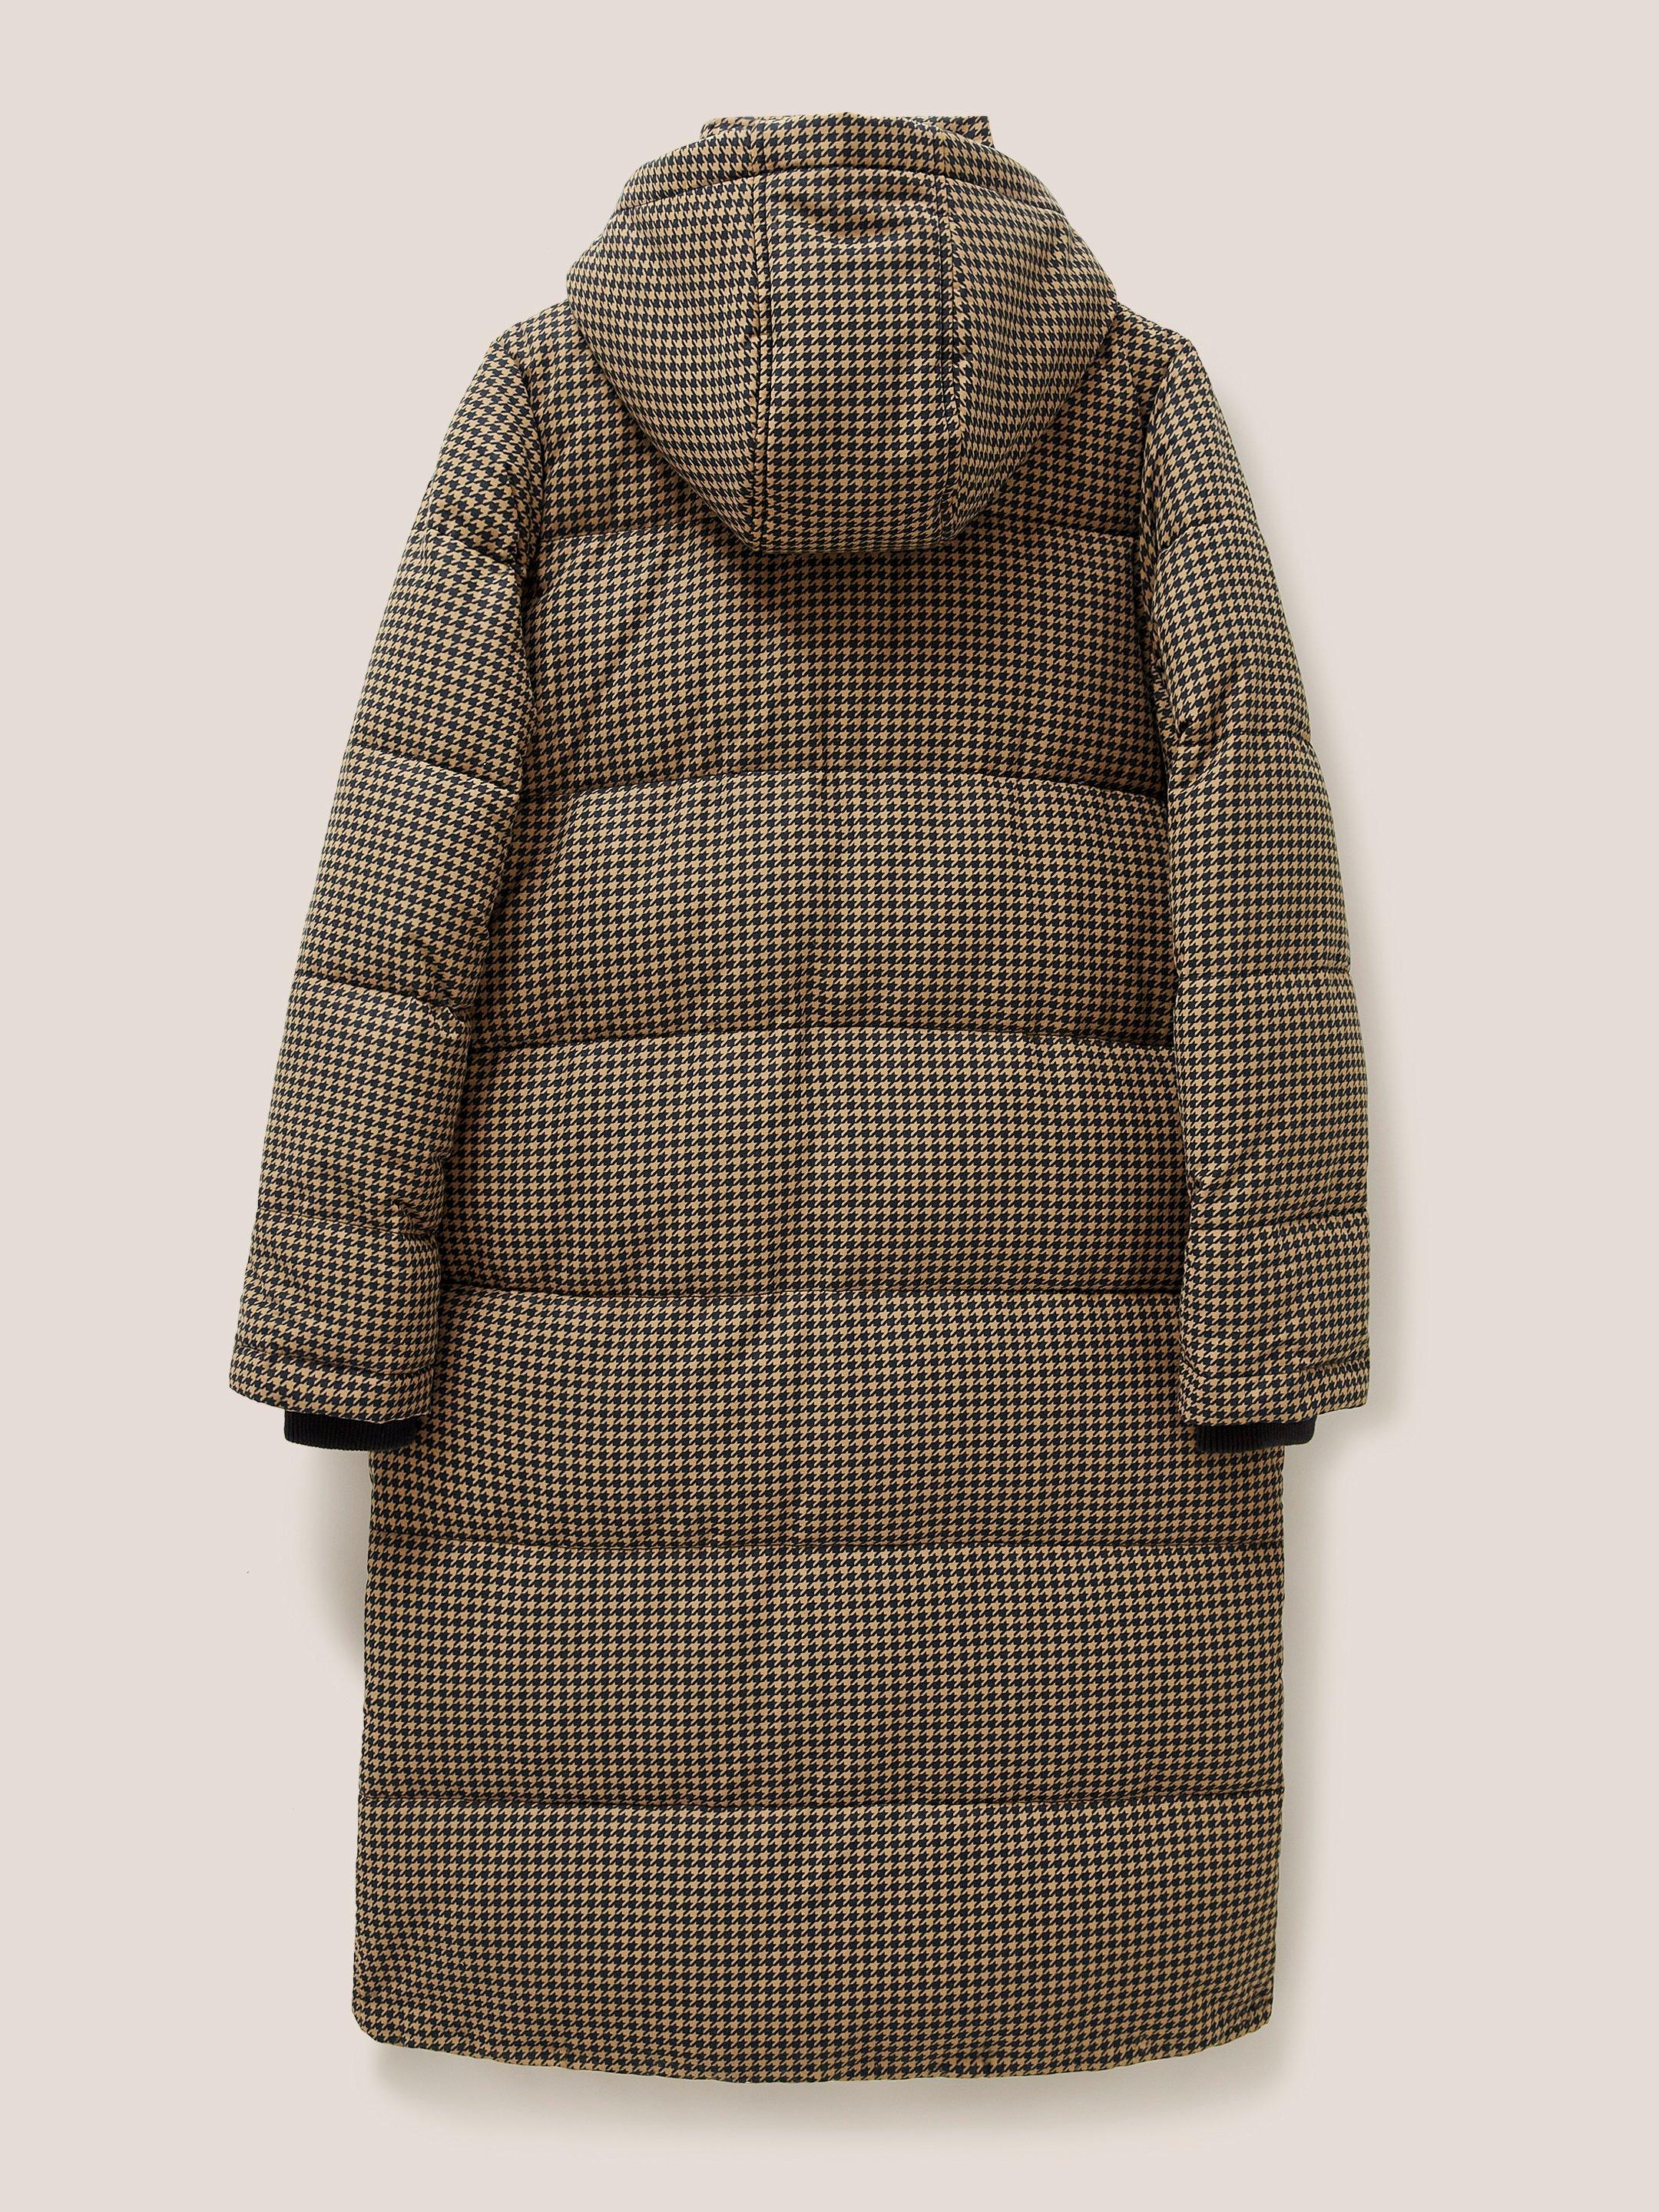 Elyse Quilted Coat in TAN PR - FLAT BACK